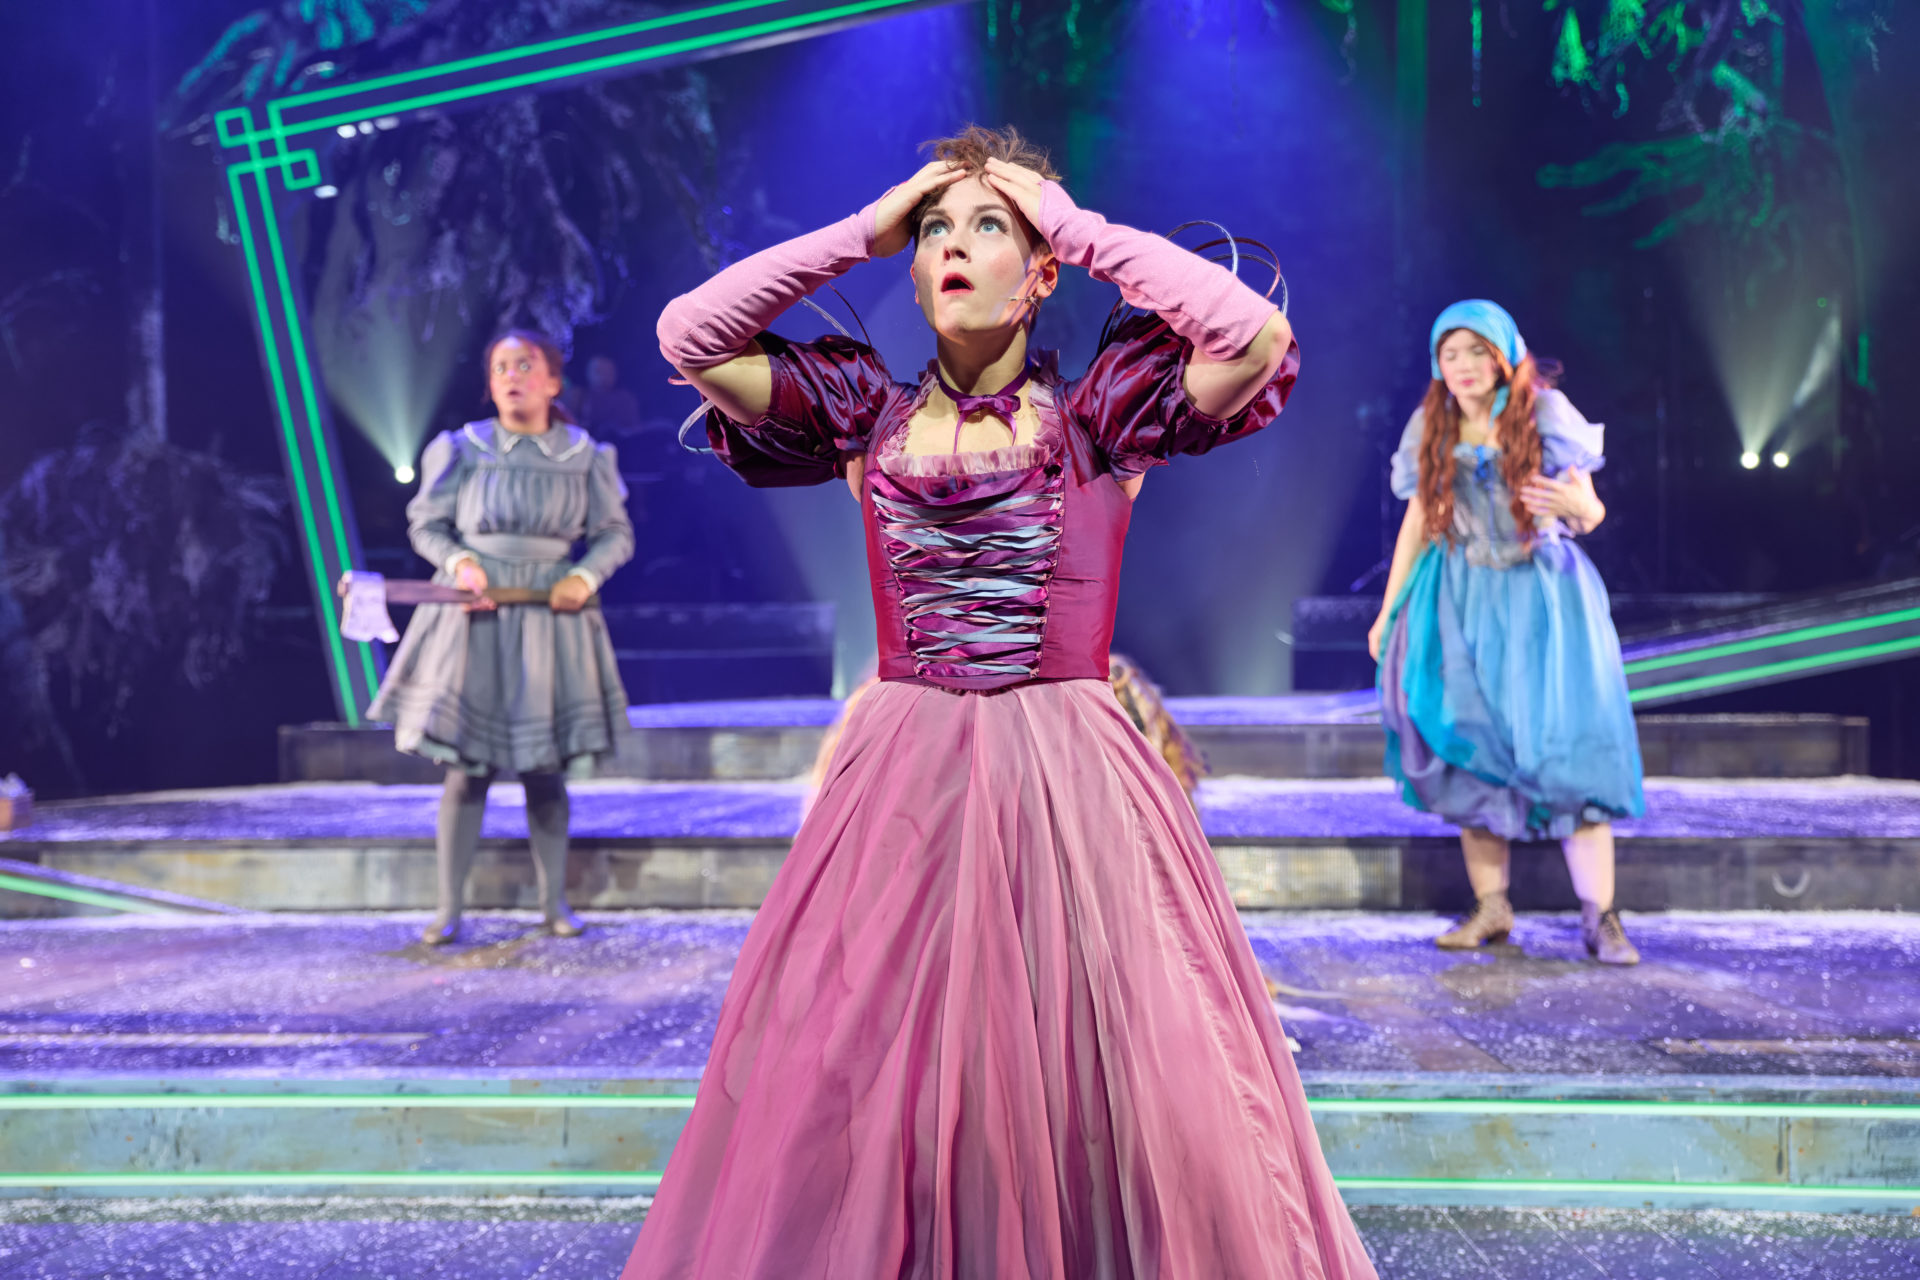 Sarah Workman as Rapunzel, Lily Beau as Stevie and Katie Elin-Salt as Cinderella